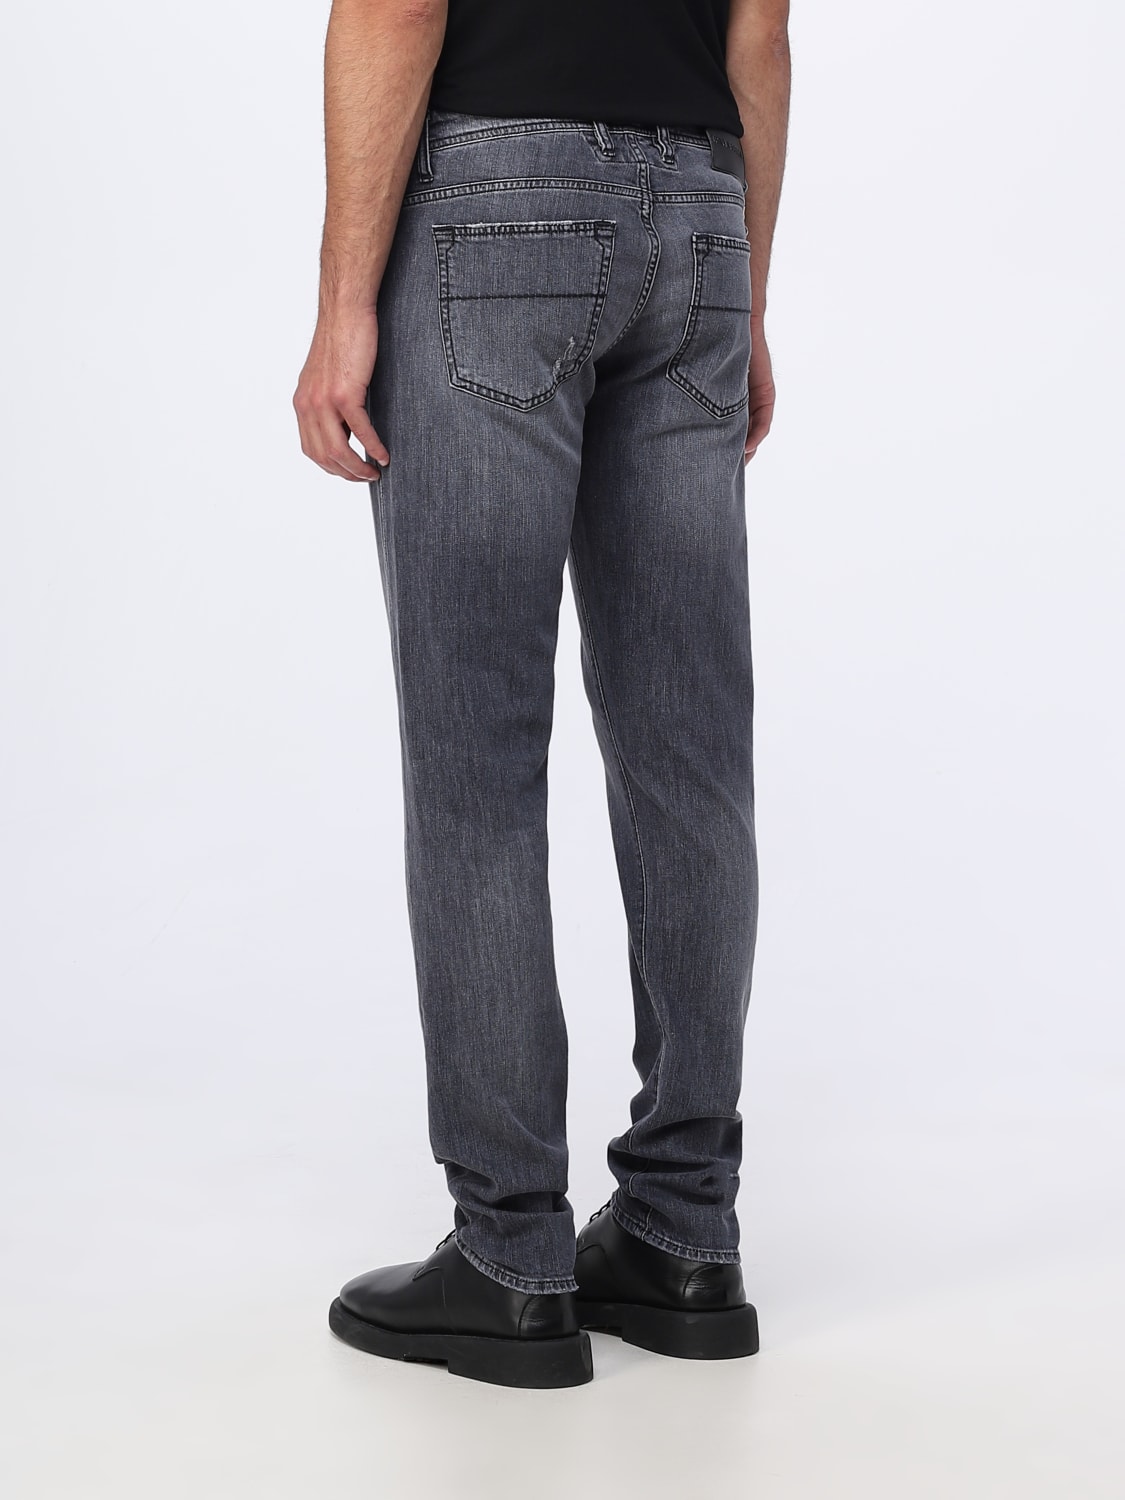 TRAMAROSSA: jeans for man - Grey | Tramarossa jeans 1980 D215 ...